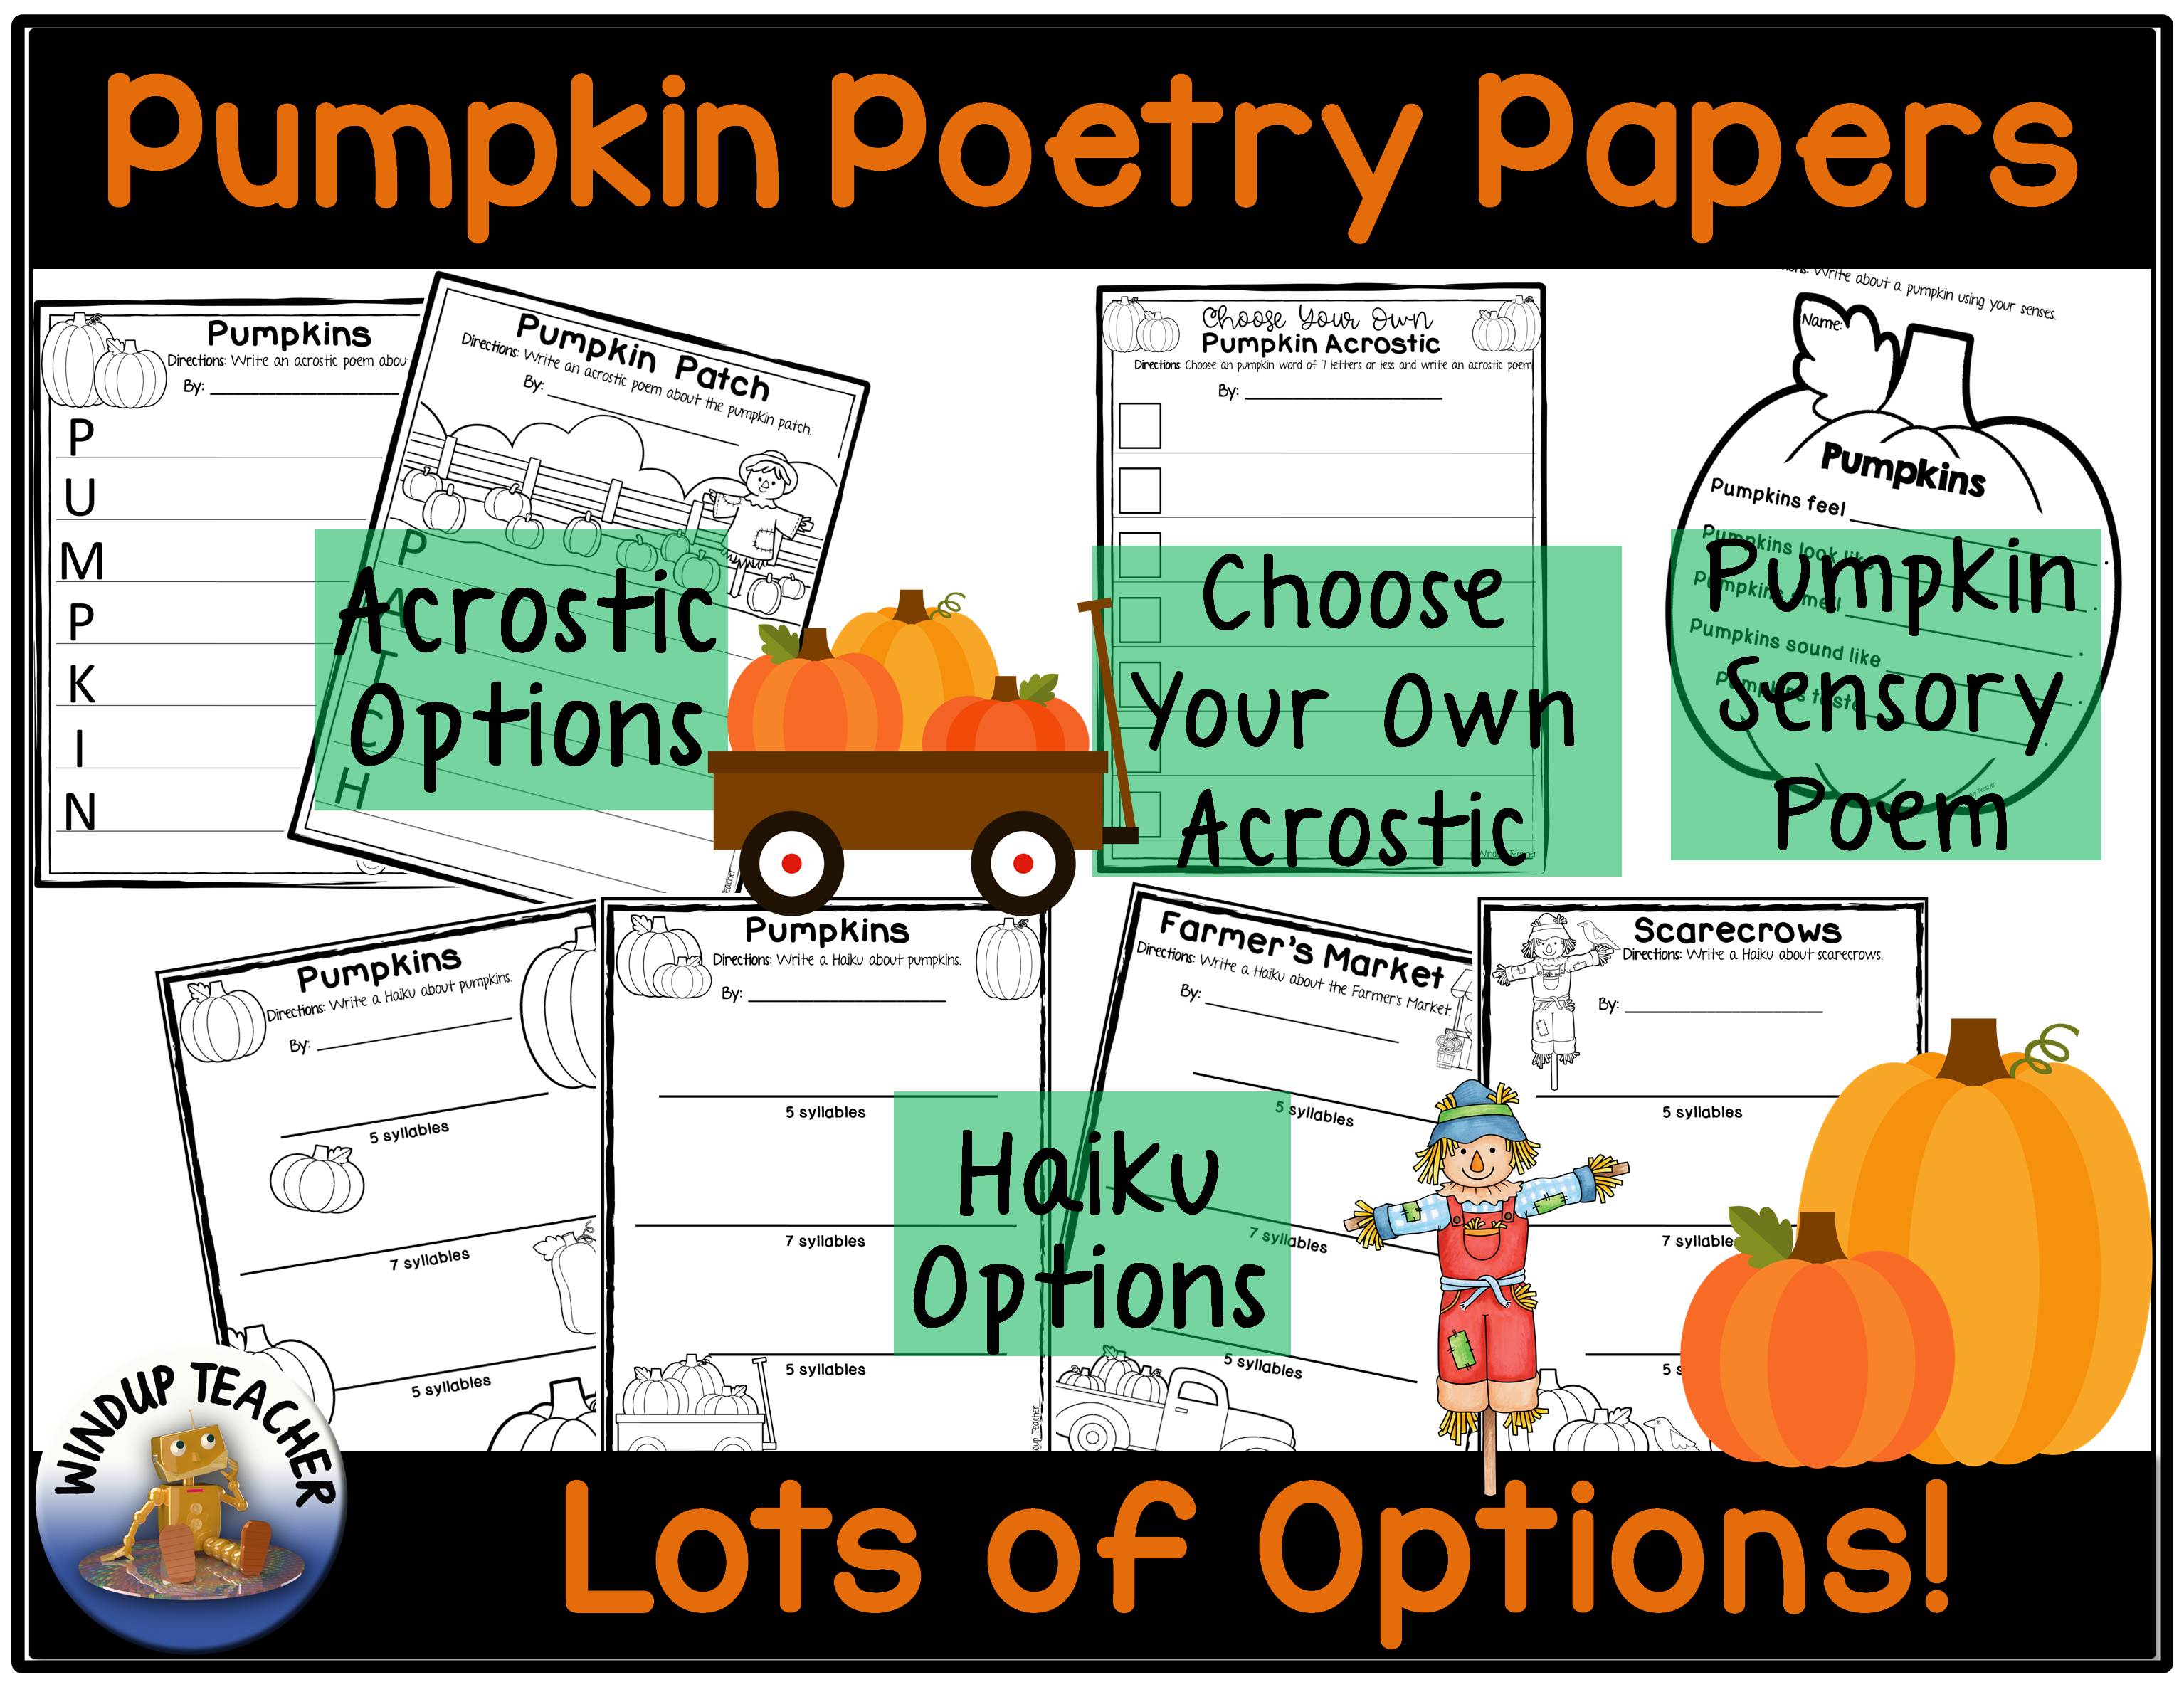 Pumpkin poetry activity sheets